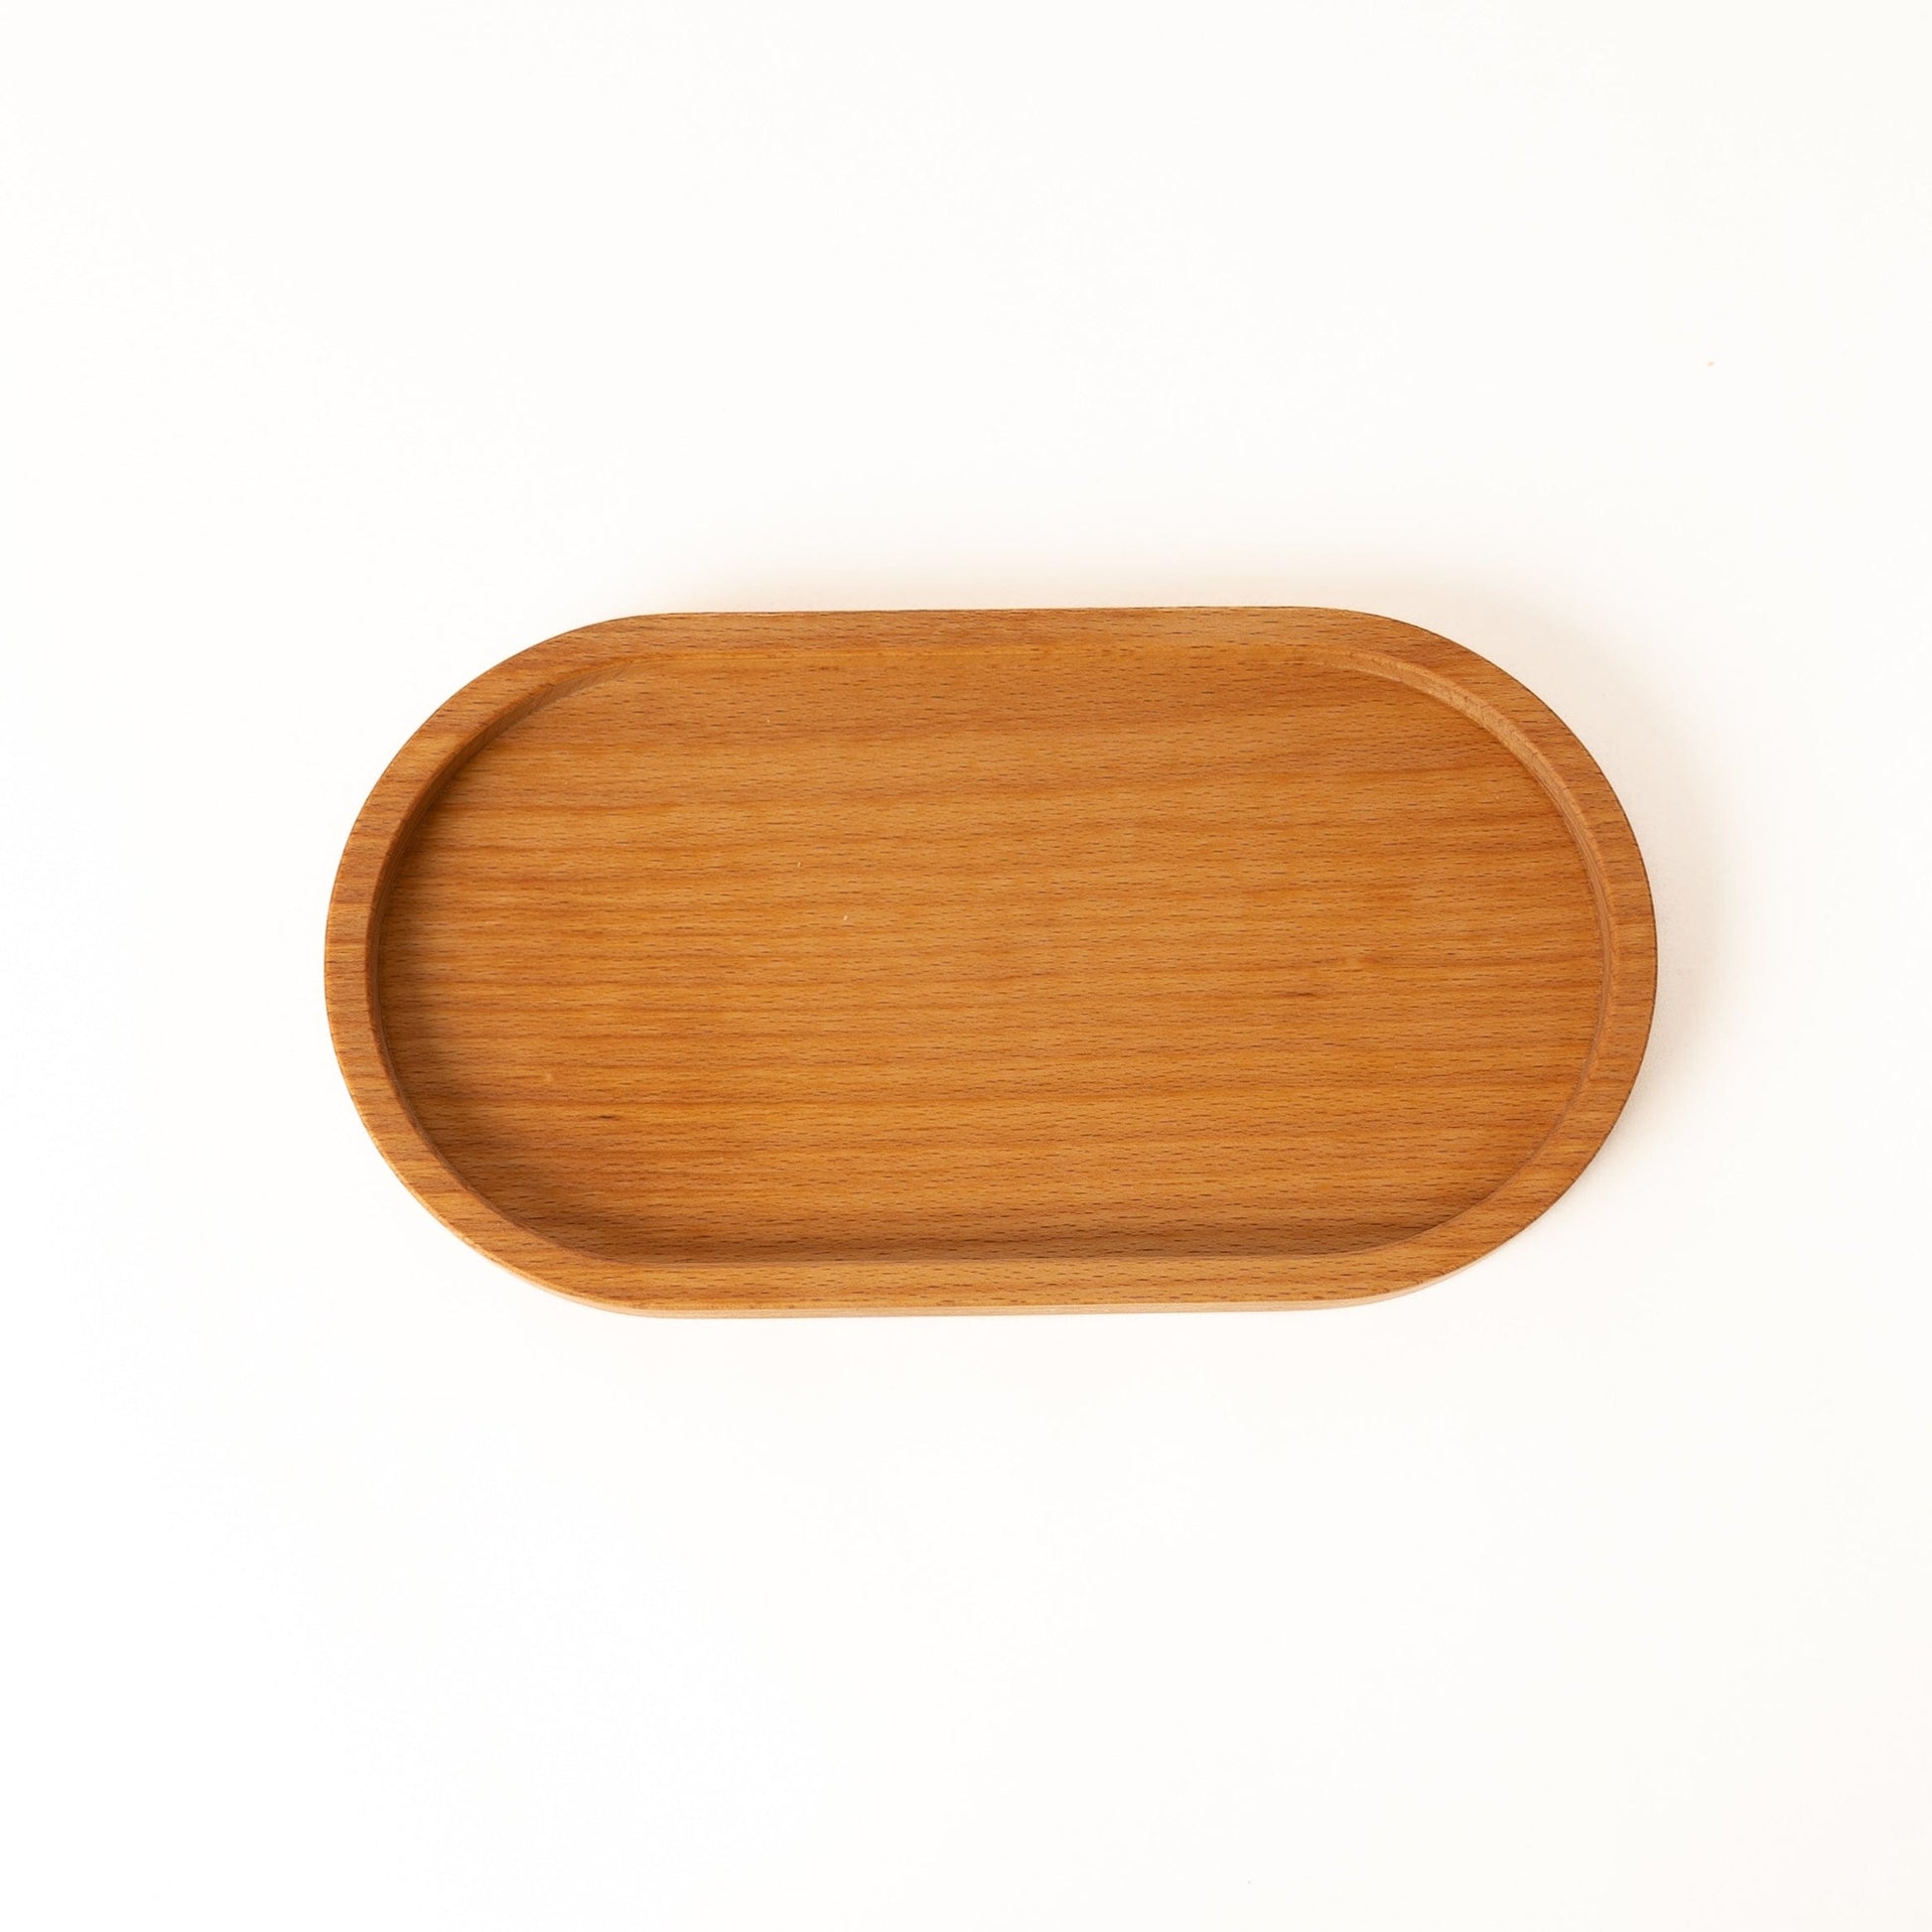 Holzmanufaktur Deko Tablett oval - Edle Geschenke aus Holz - Schmuckschale Schale aus Holz